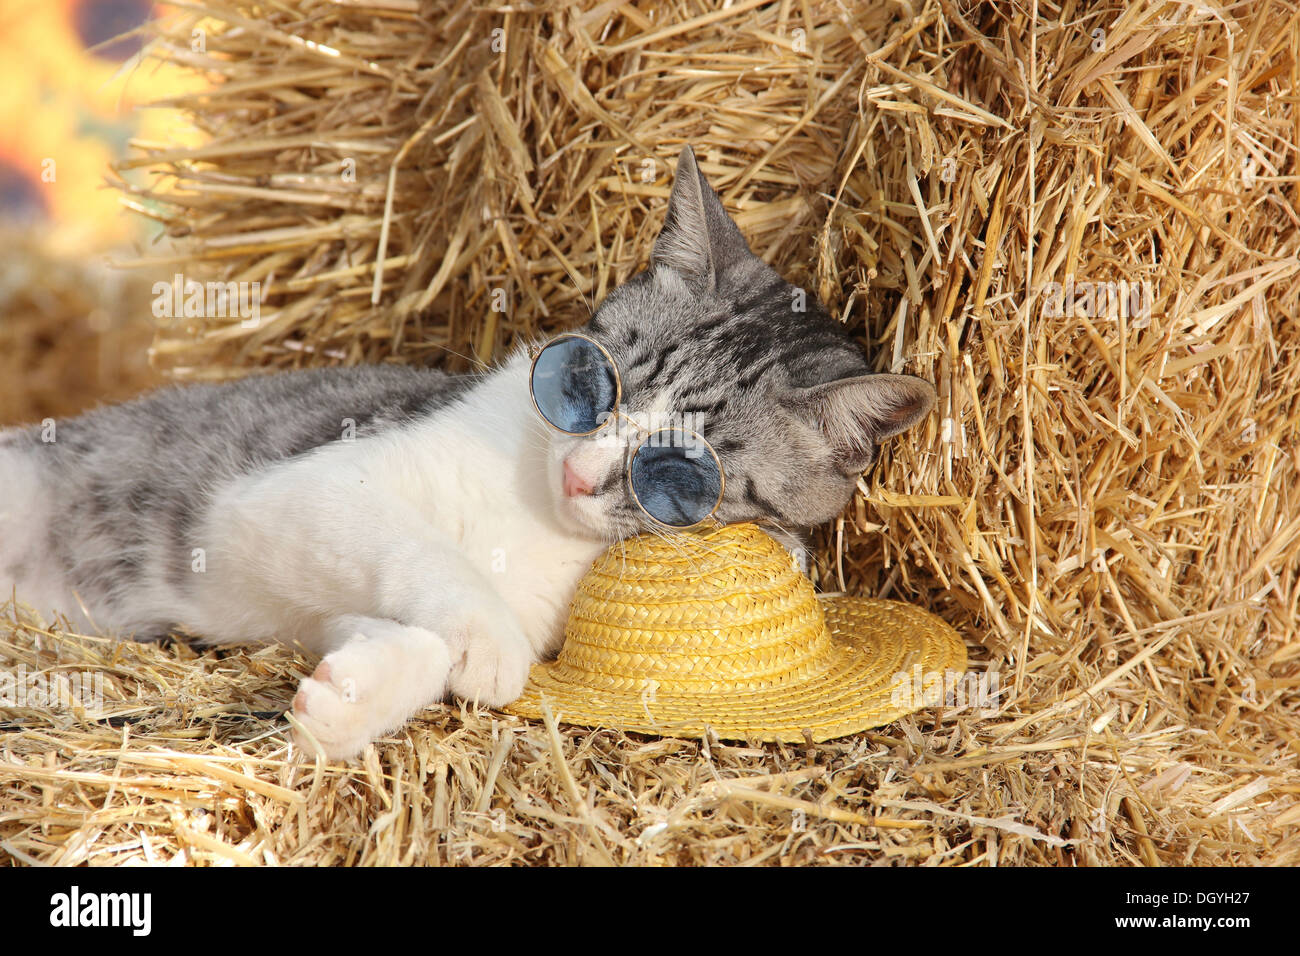 https://c8.alamy.com/comp/DGYH27/domestic-cat-kitten-75-days-old-with-sunglasses-sleeping-on-a-hat-DGYH27.jpg